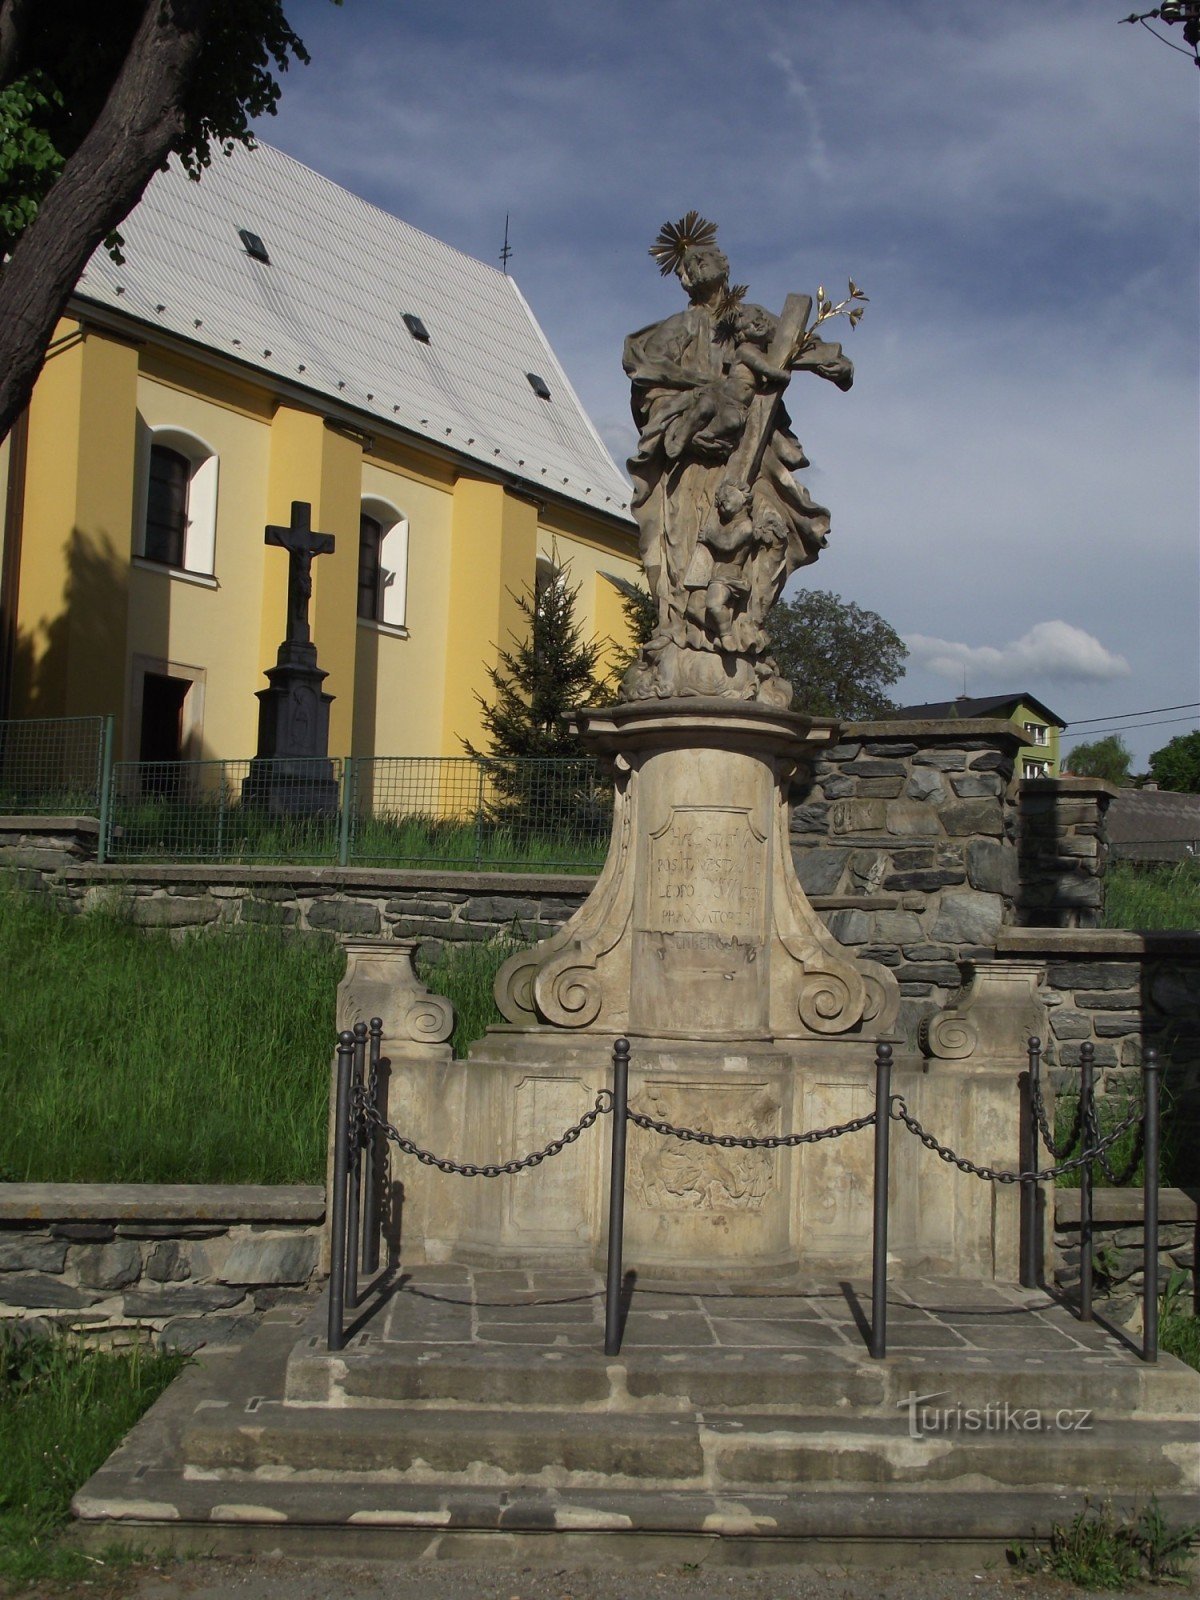 Ruda nad Moravou - die Statue des hl. Joseph